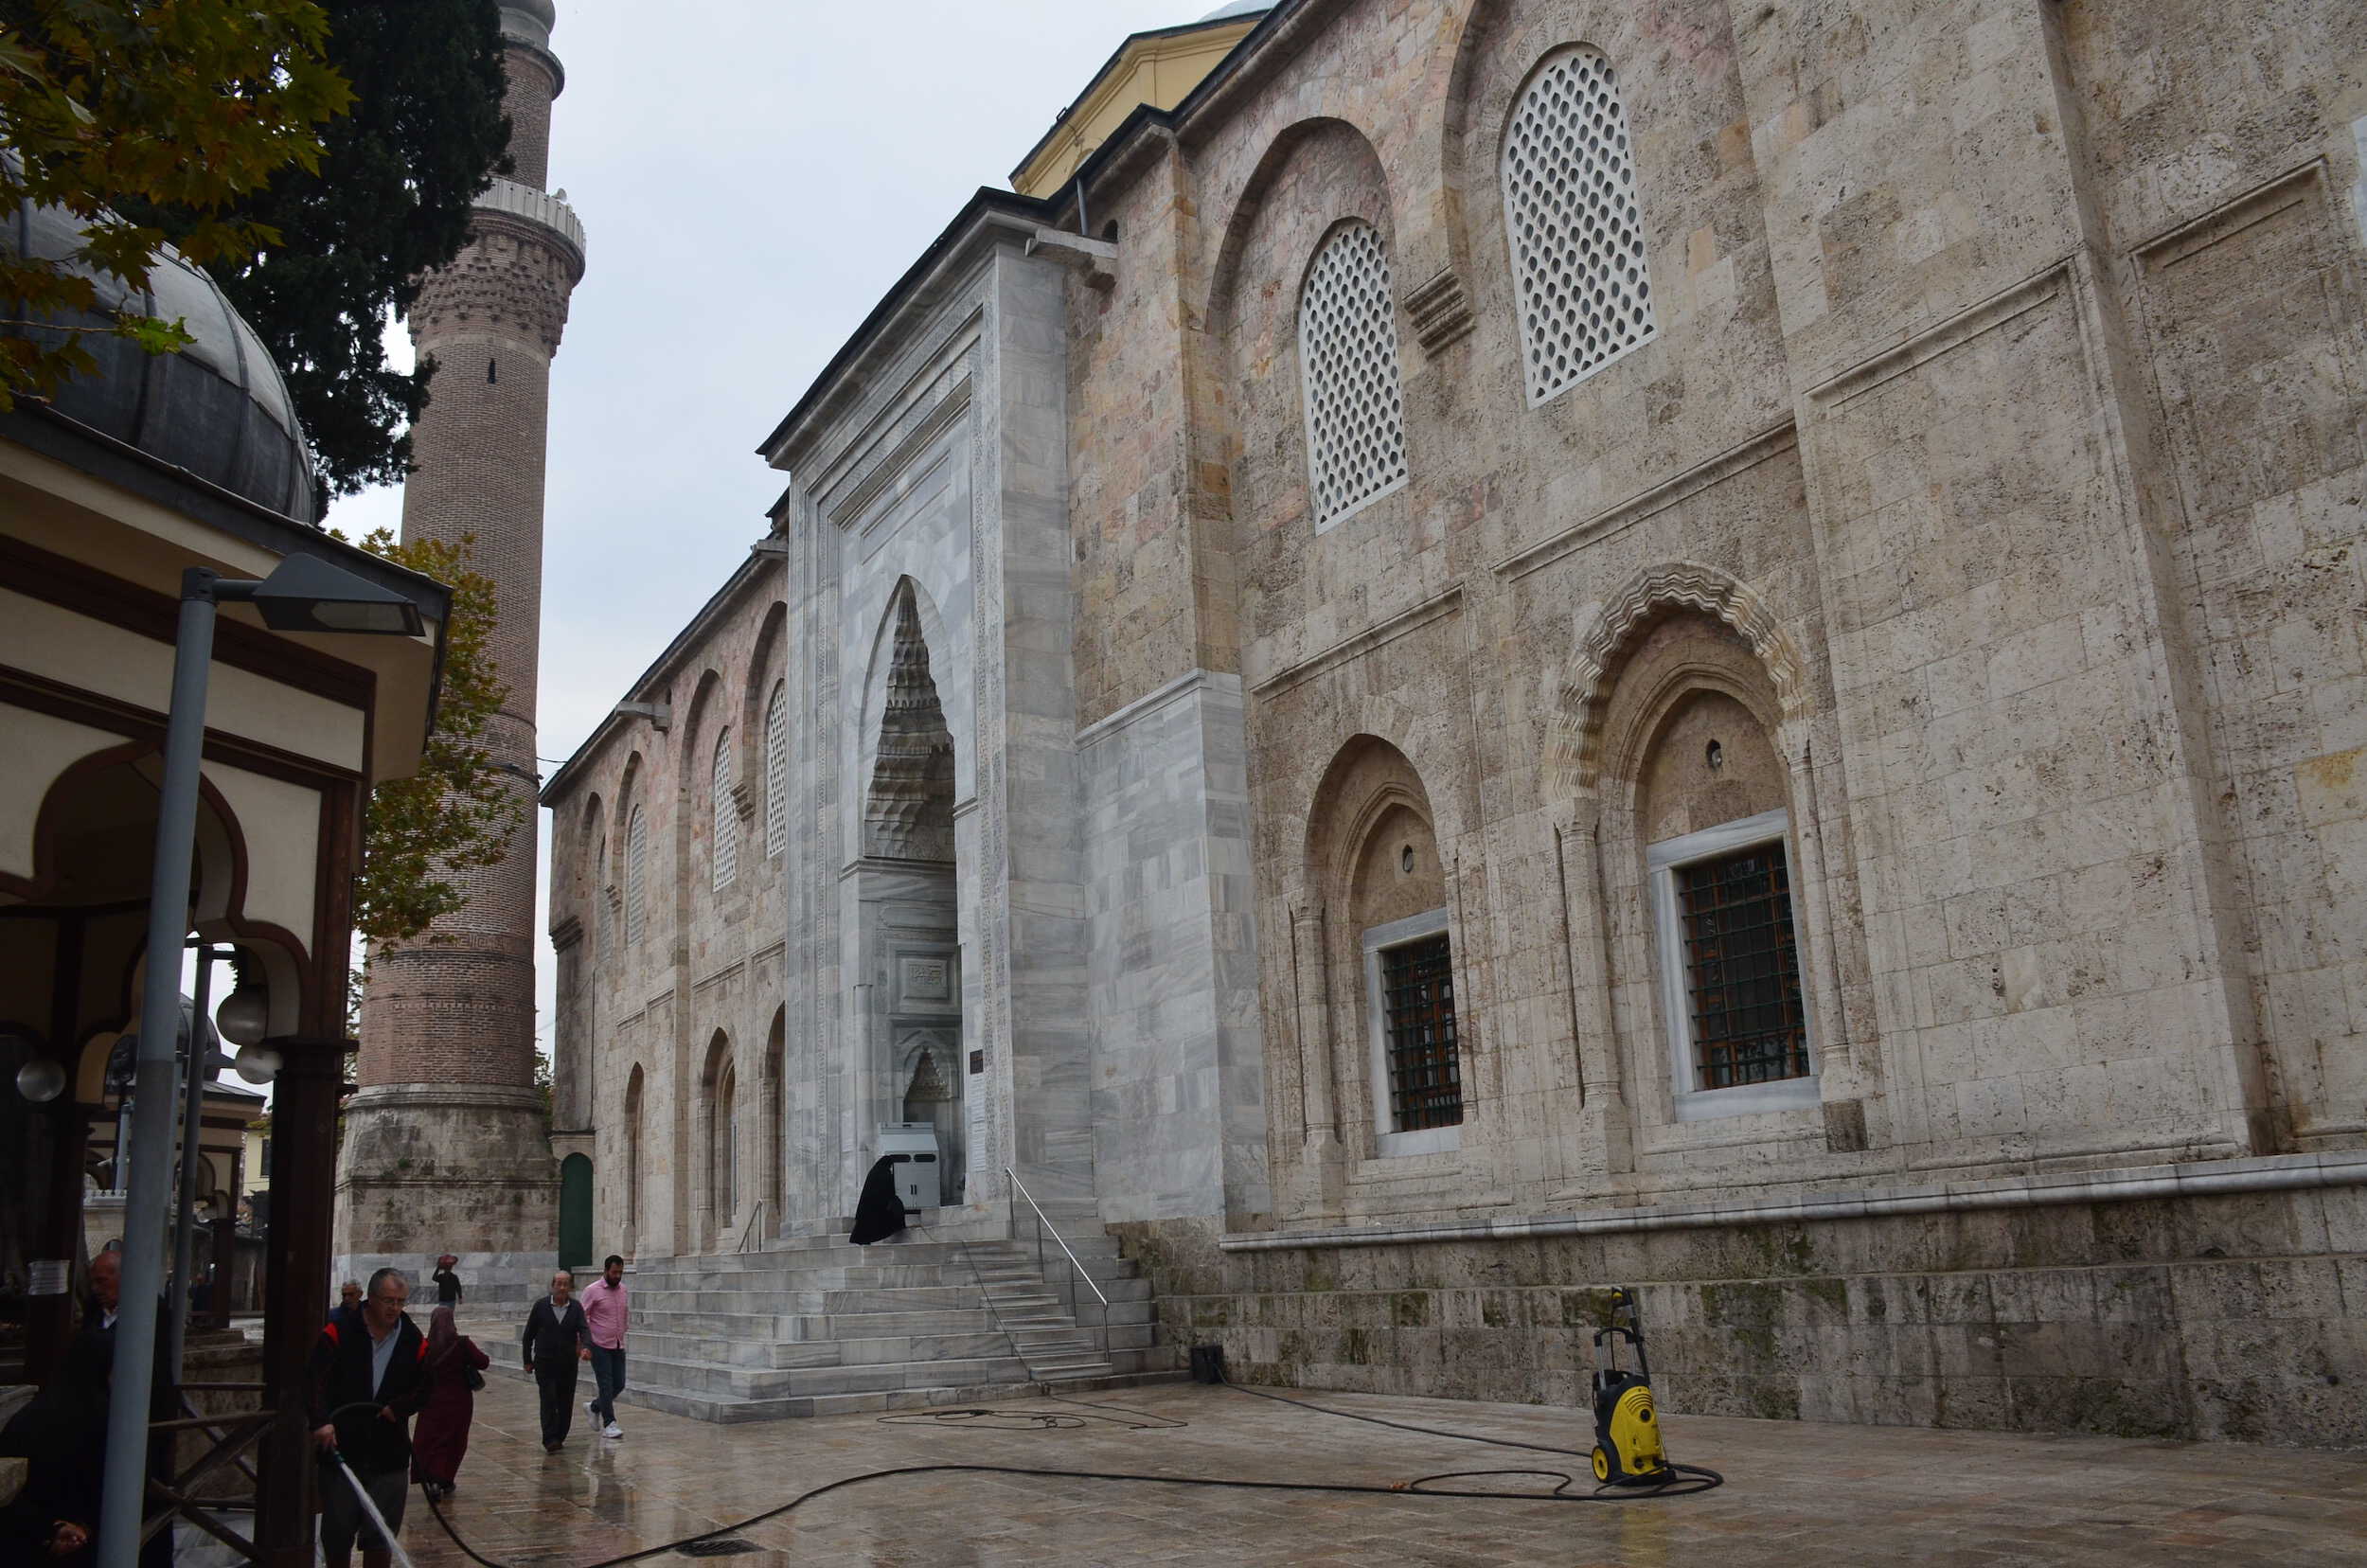 Northern façade of the Grand Mosque in Bursa, Turkey